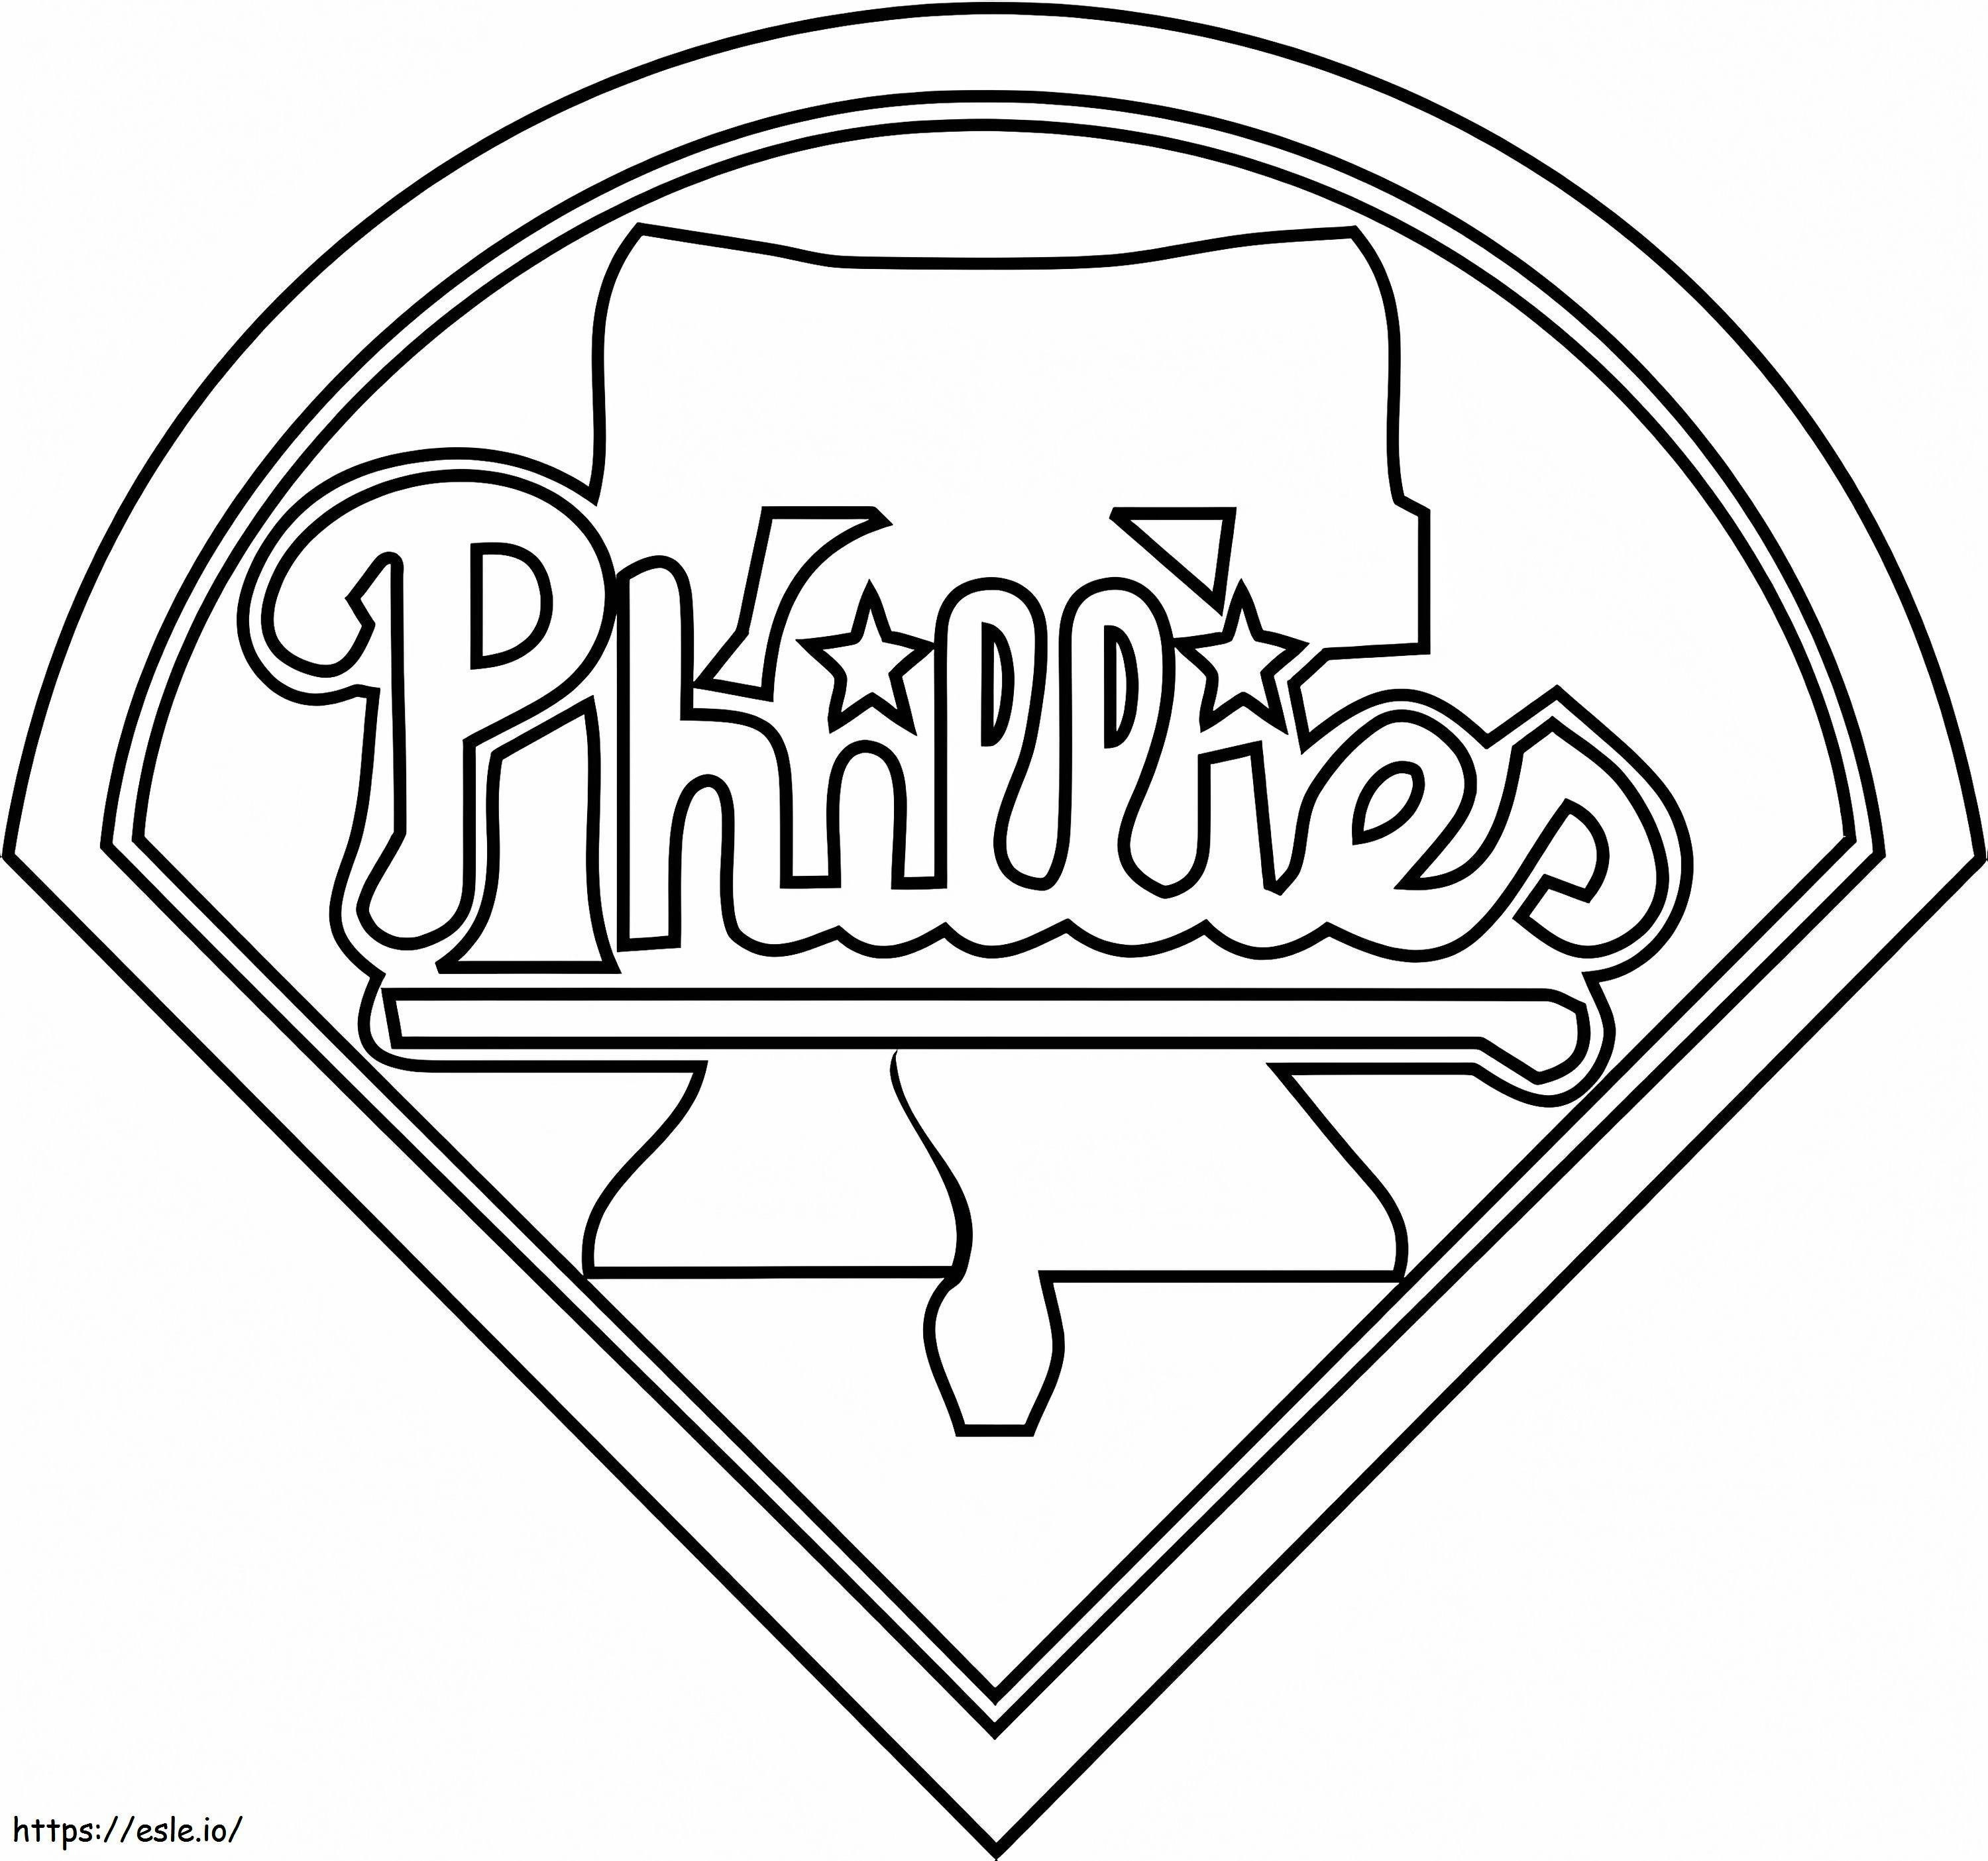 Logo Filadelfii Phillies kolorowanka